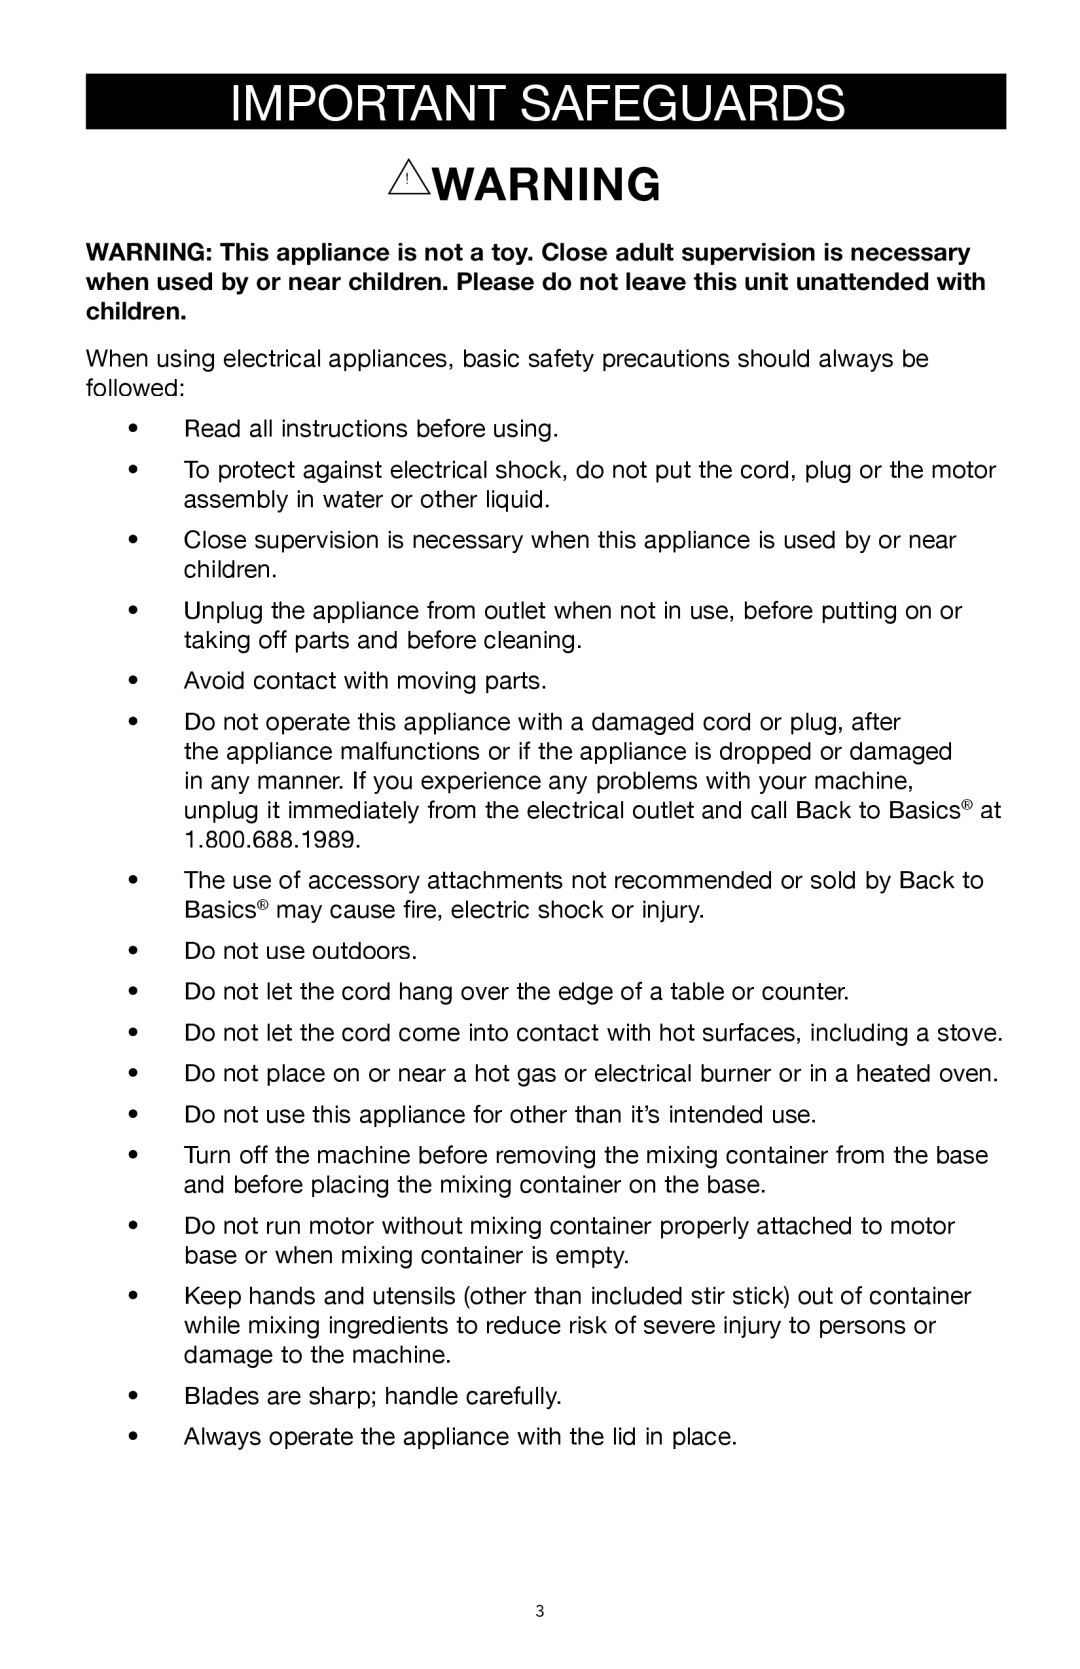 West Bend Back to Basics SUP400BINST manual Important Safeguards 